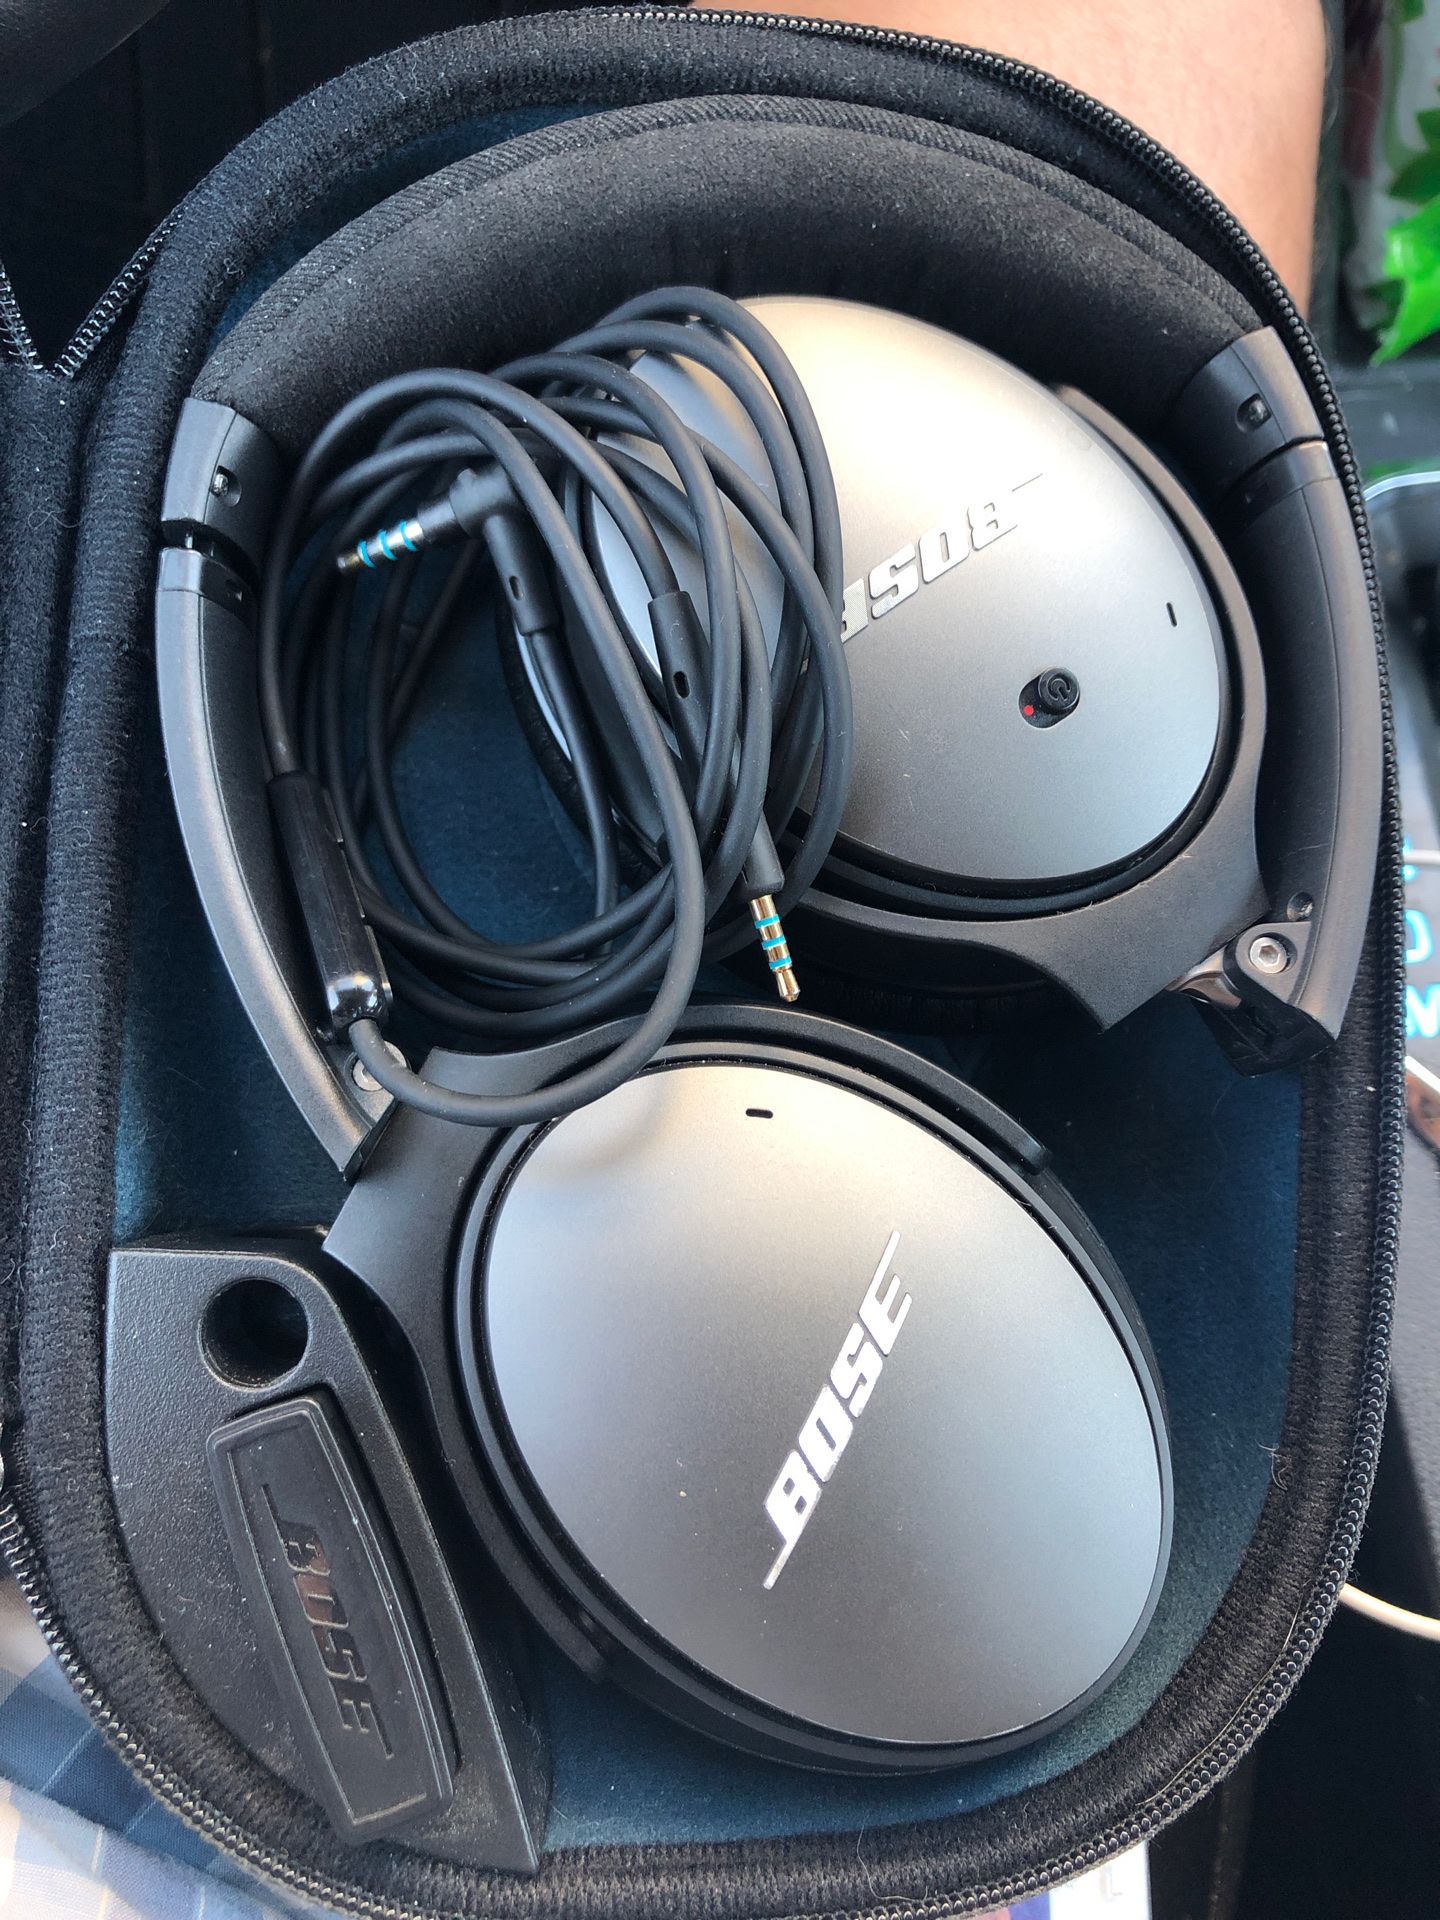 Bose Quiet comfort 25 noice cancelling headphones